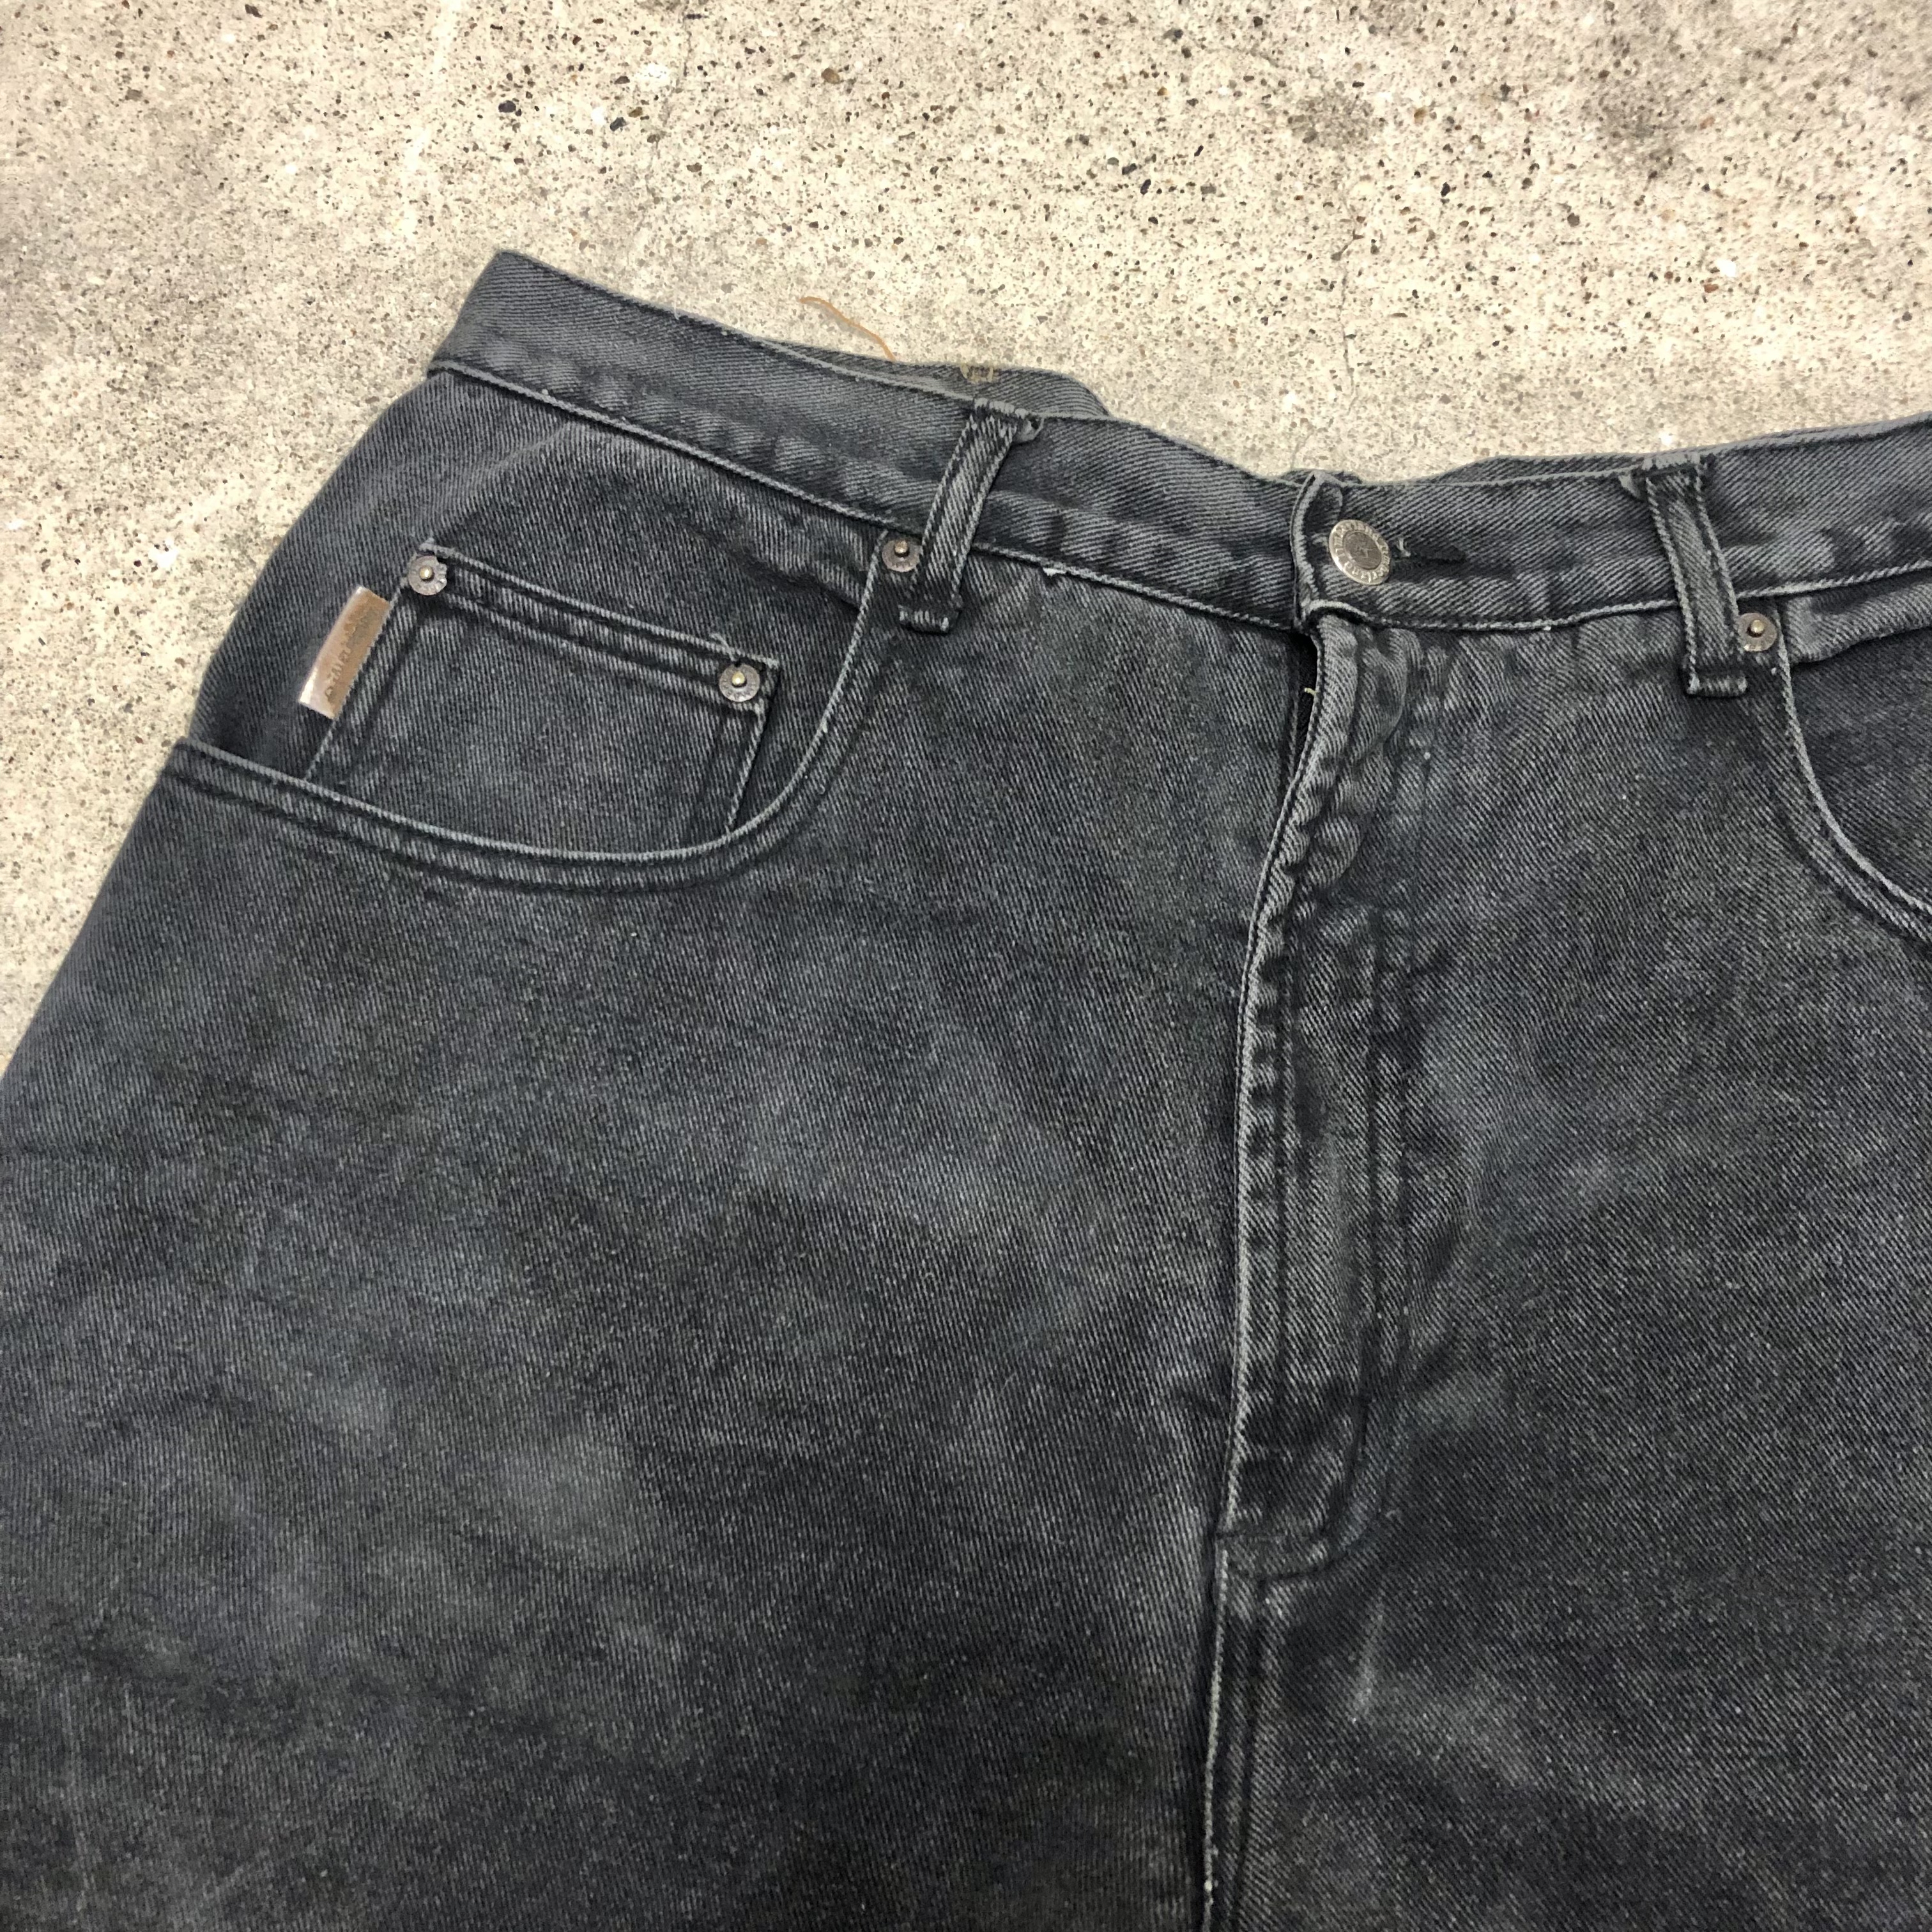 90～00s Timberland/Black denim shorts/W36/ブラックデニムショーツ